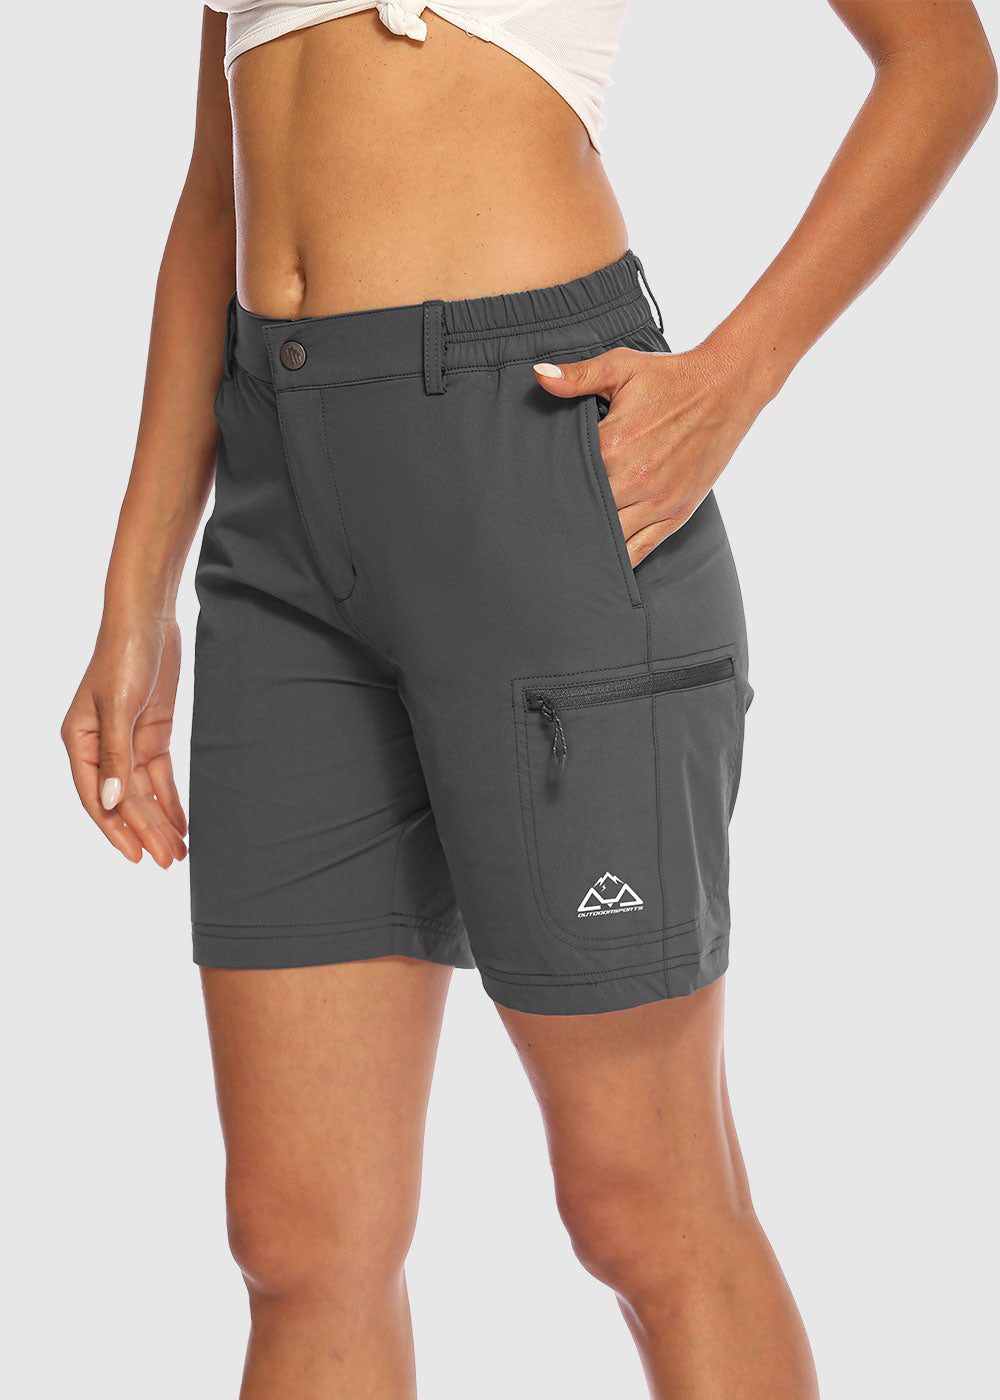 G Gradual Women's Long Hiking Cargo Shorts 13 Knee Length Lightweight  Quick Dry Bermuda Shorts for Women with 5 Pockets(Blue,L)